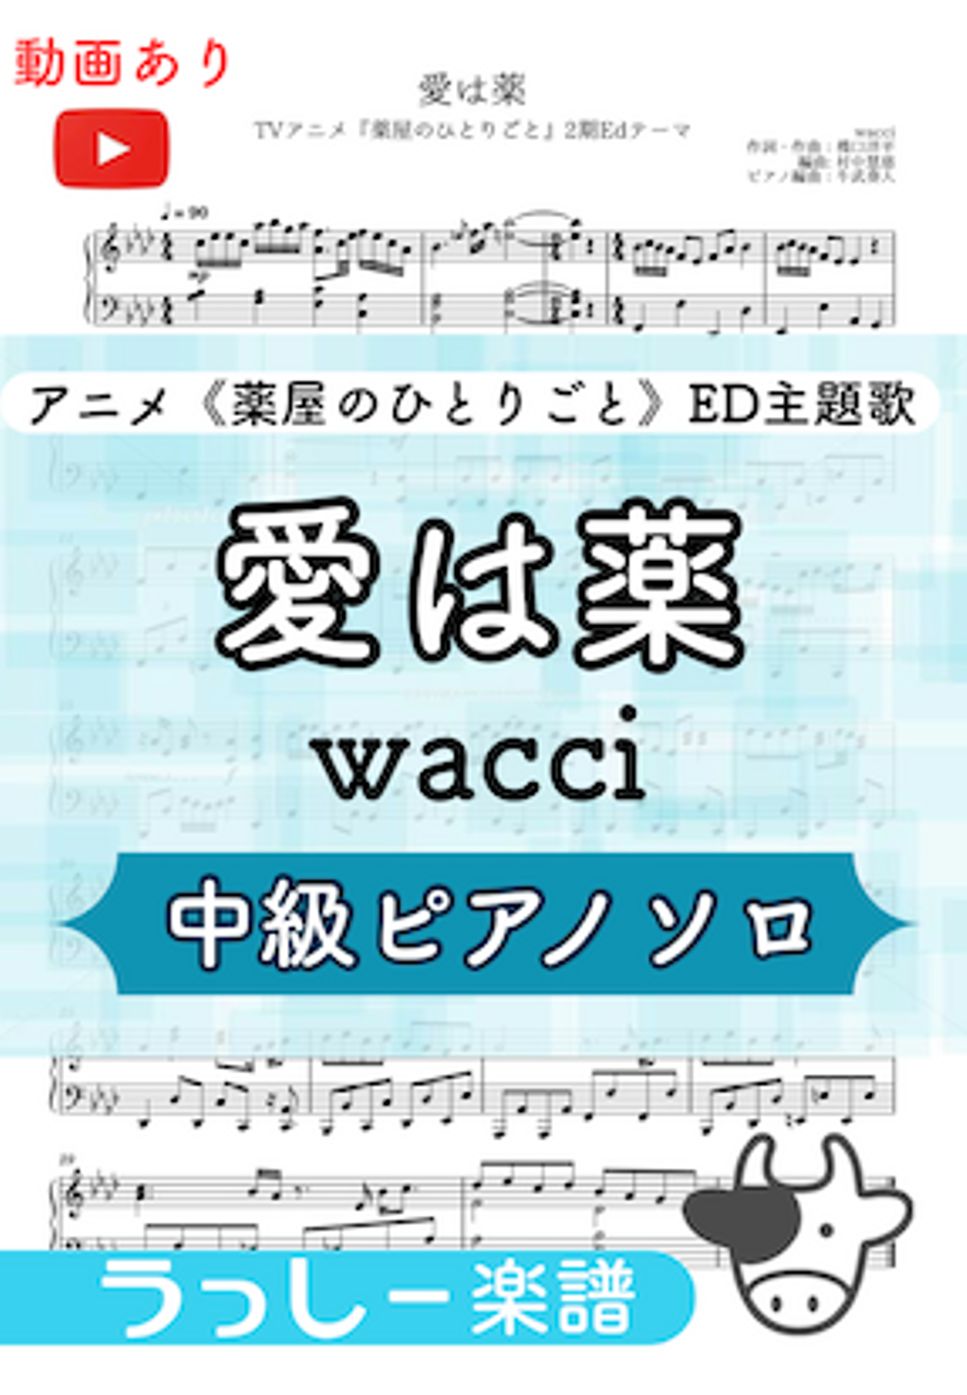 wacci - 愛は薬 (アニメ『薬屋のひとりごと』2期ED) by 牛武奏人